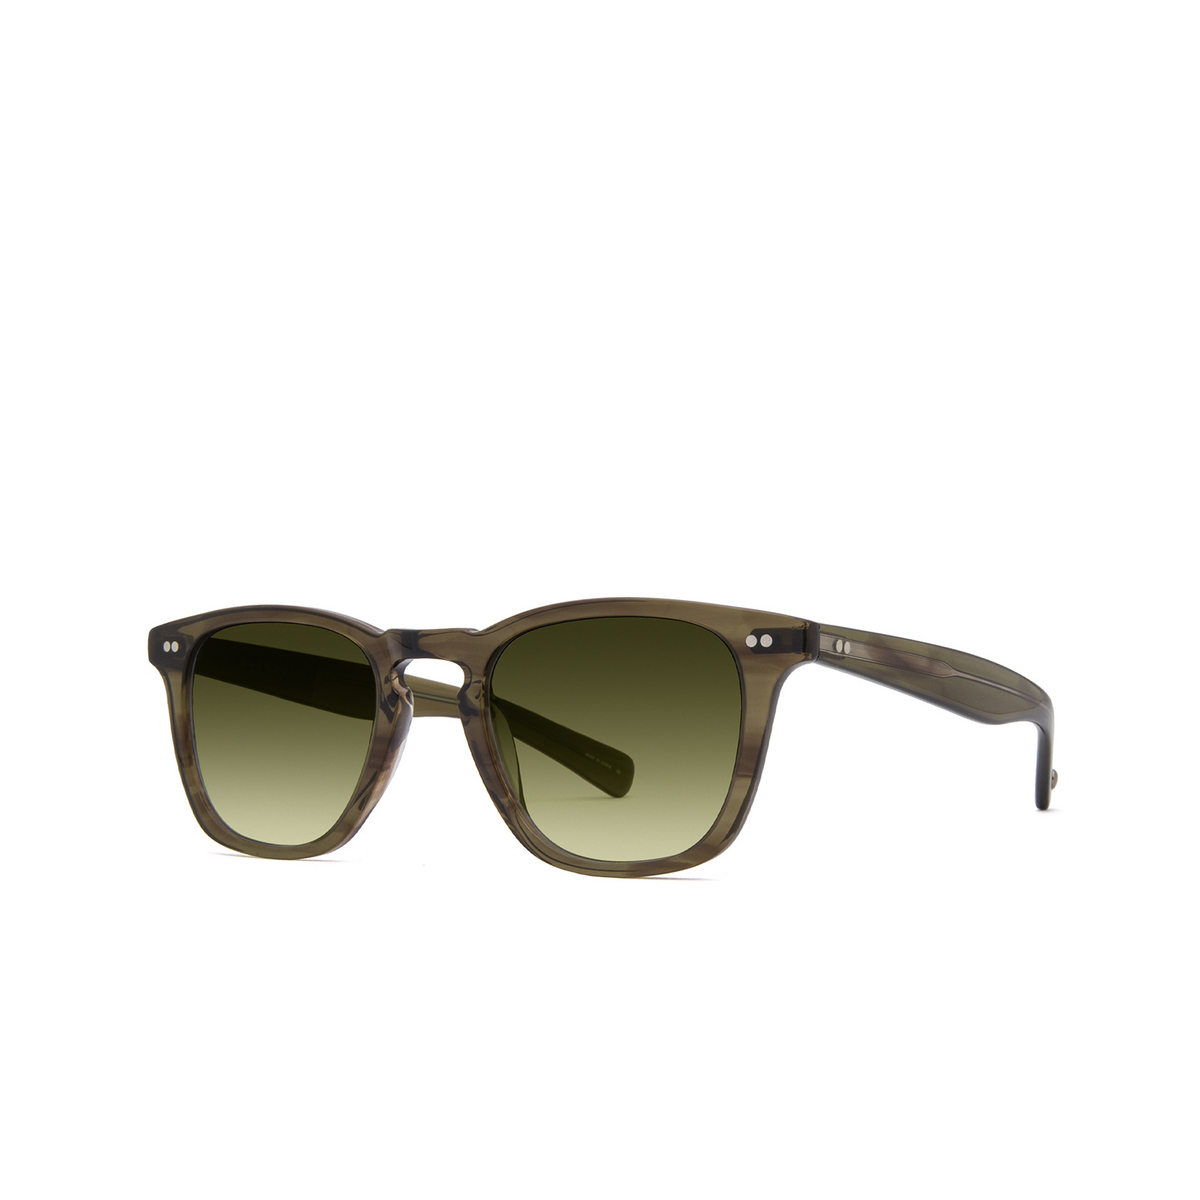 Garrett Leight® Square Sunglasses: Glco X Jenni Kayne Sun color Ot/og Olive Tortoise/olive Gradient - three-quarters view